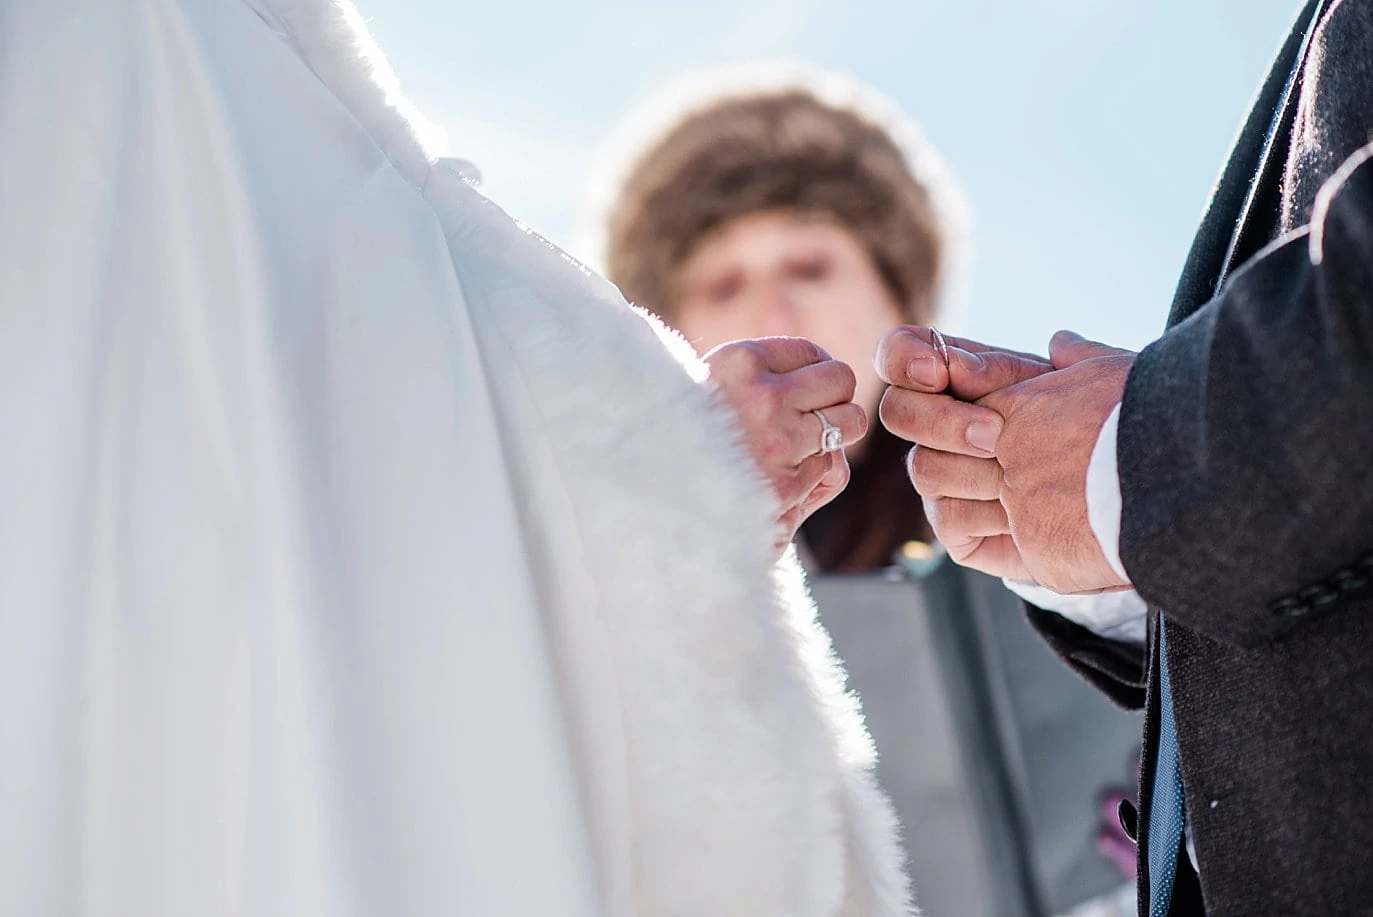 wedding ring exchange at Sapphire Point Elopement by Breckenridge wedding photographer Jennie Crate Photographer